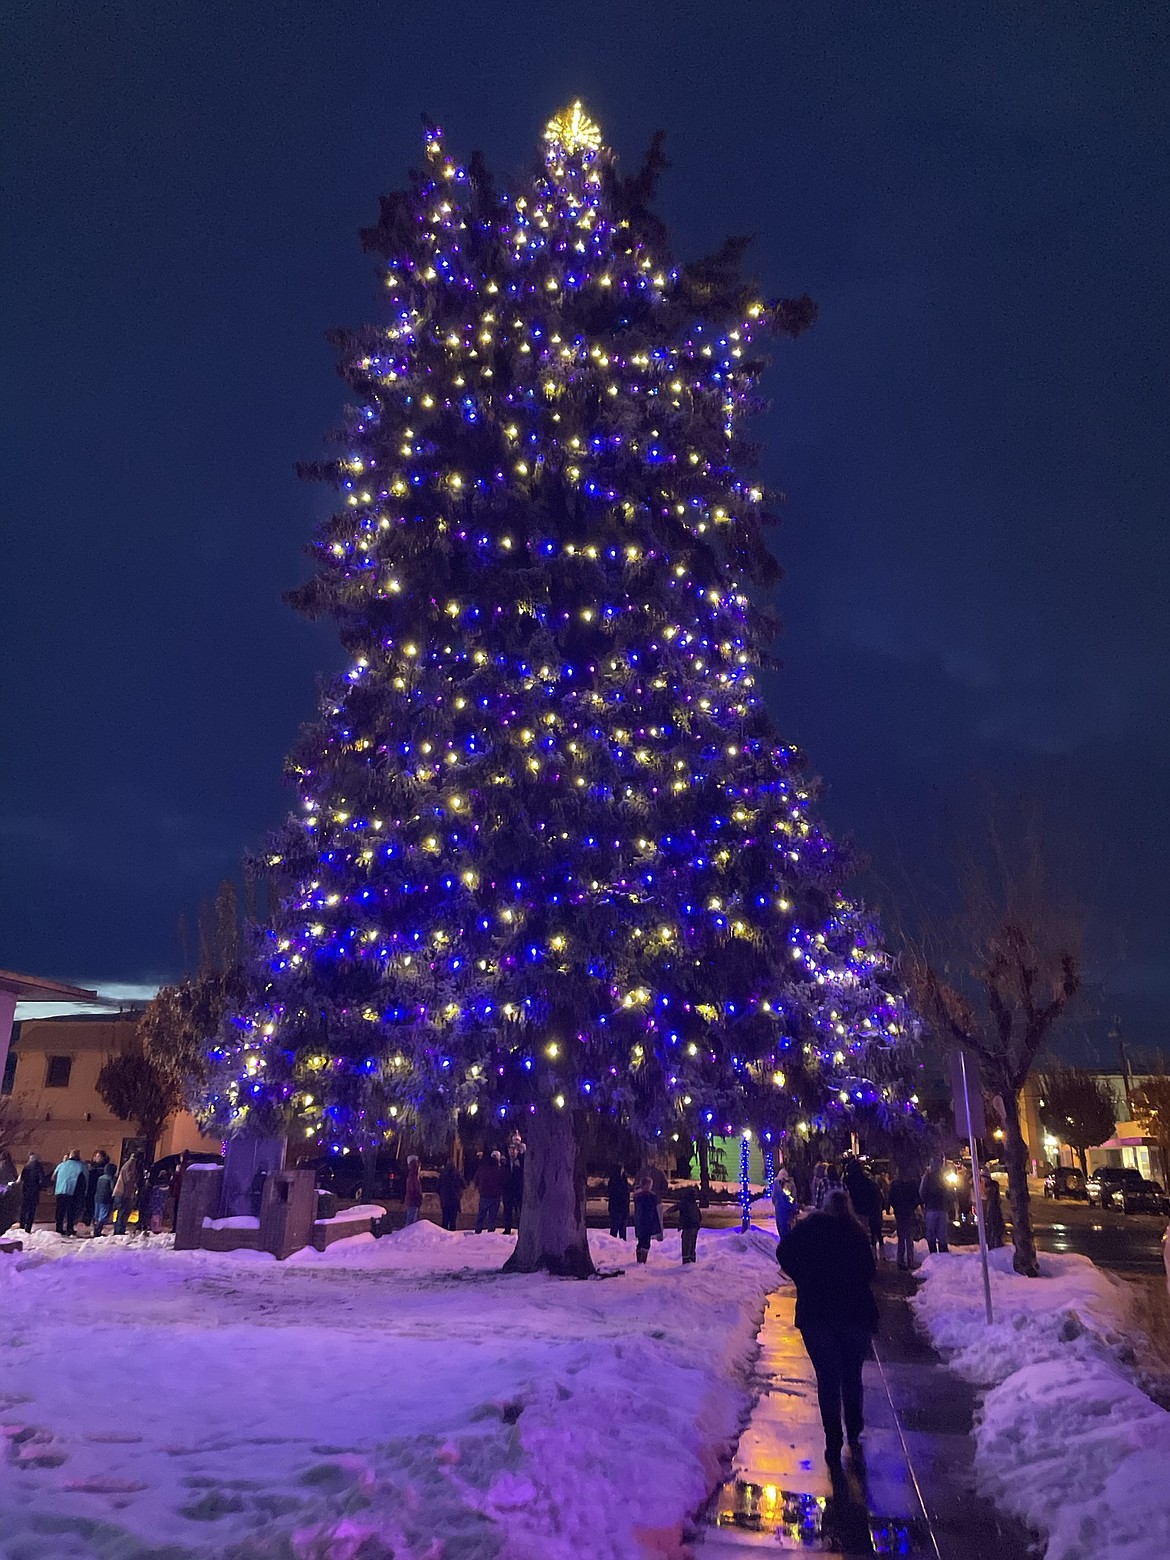 The city of Ephrata’s Christmas tree.